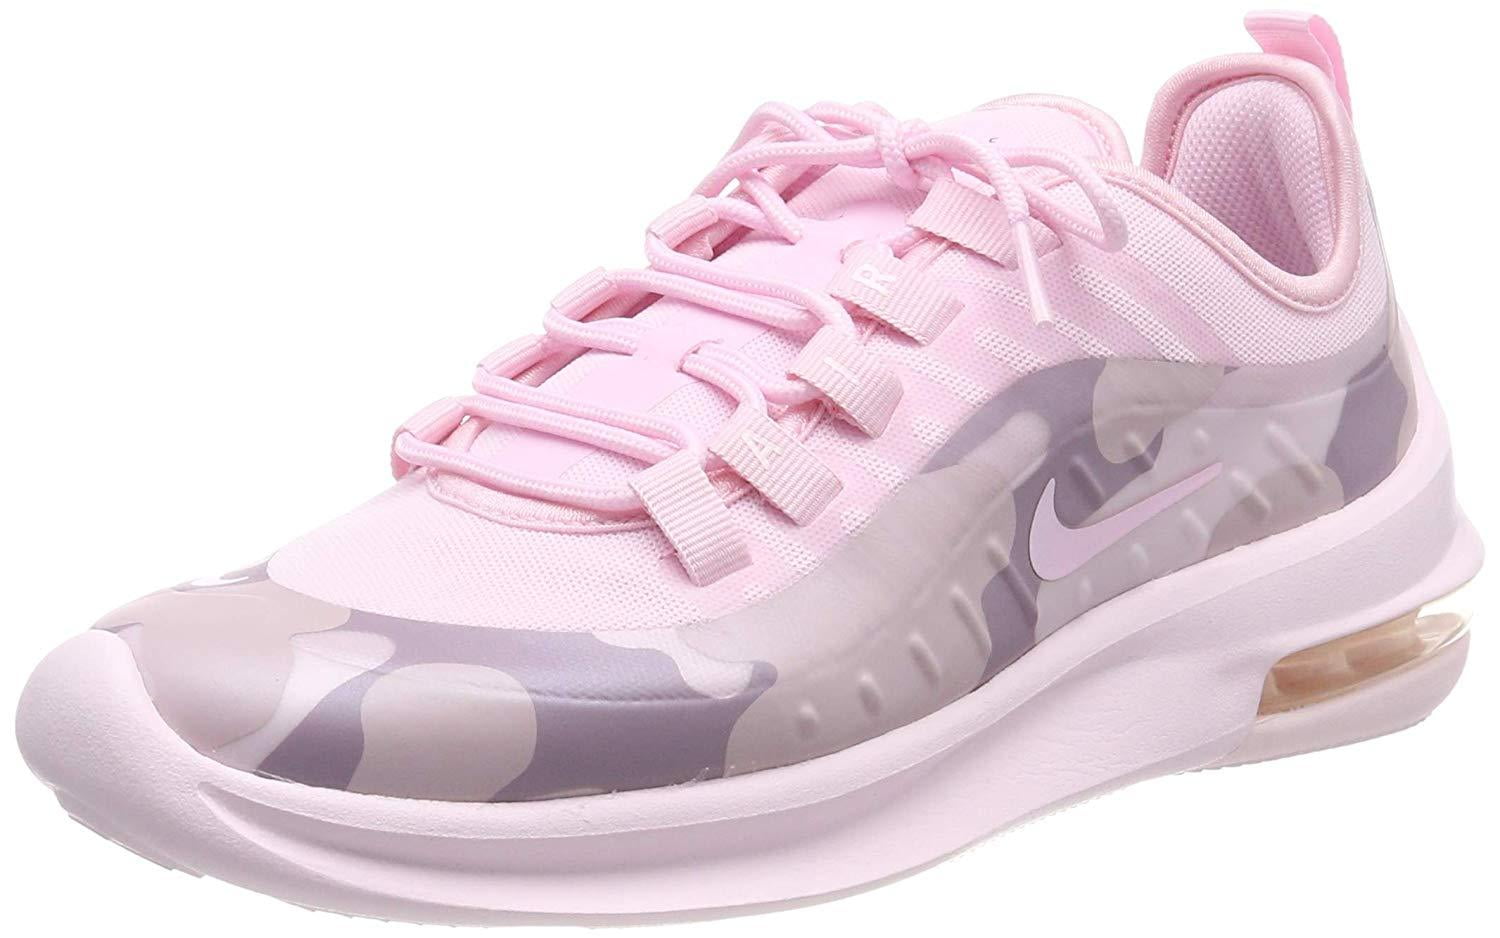 Nike Air Axis Premium Pink/Pink Foam-Black (WS) (BQ0126 600) - 6 Walmart.com